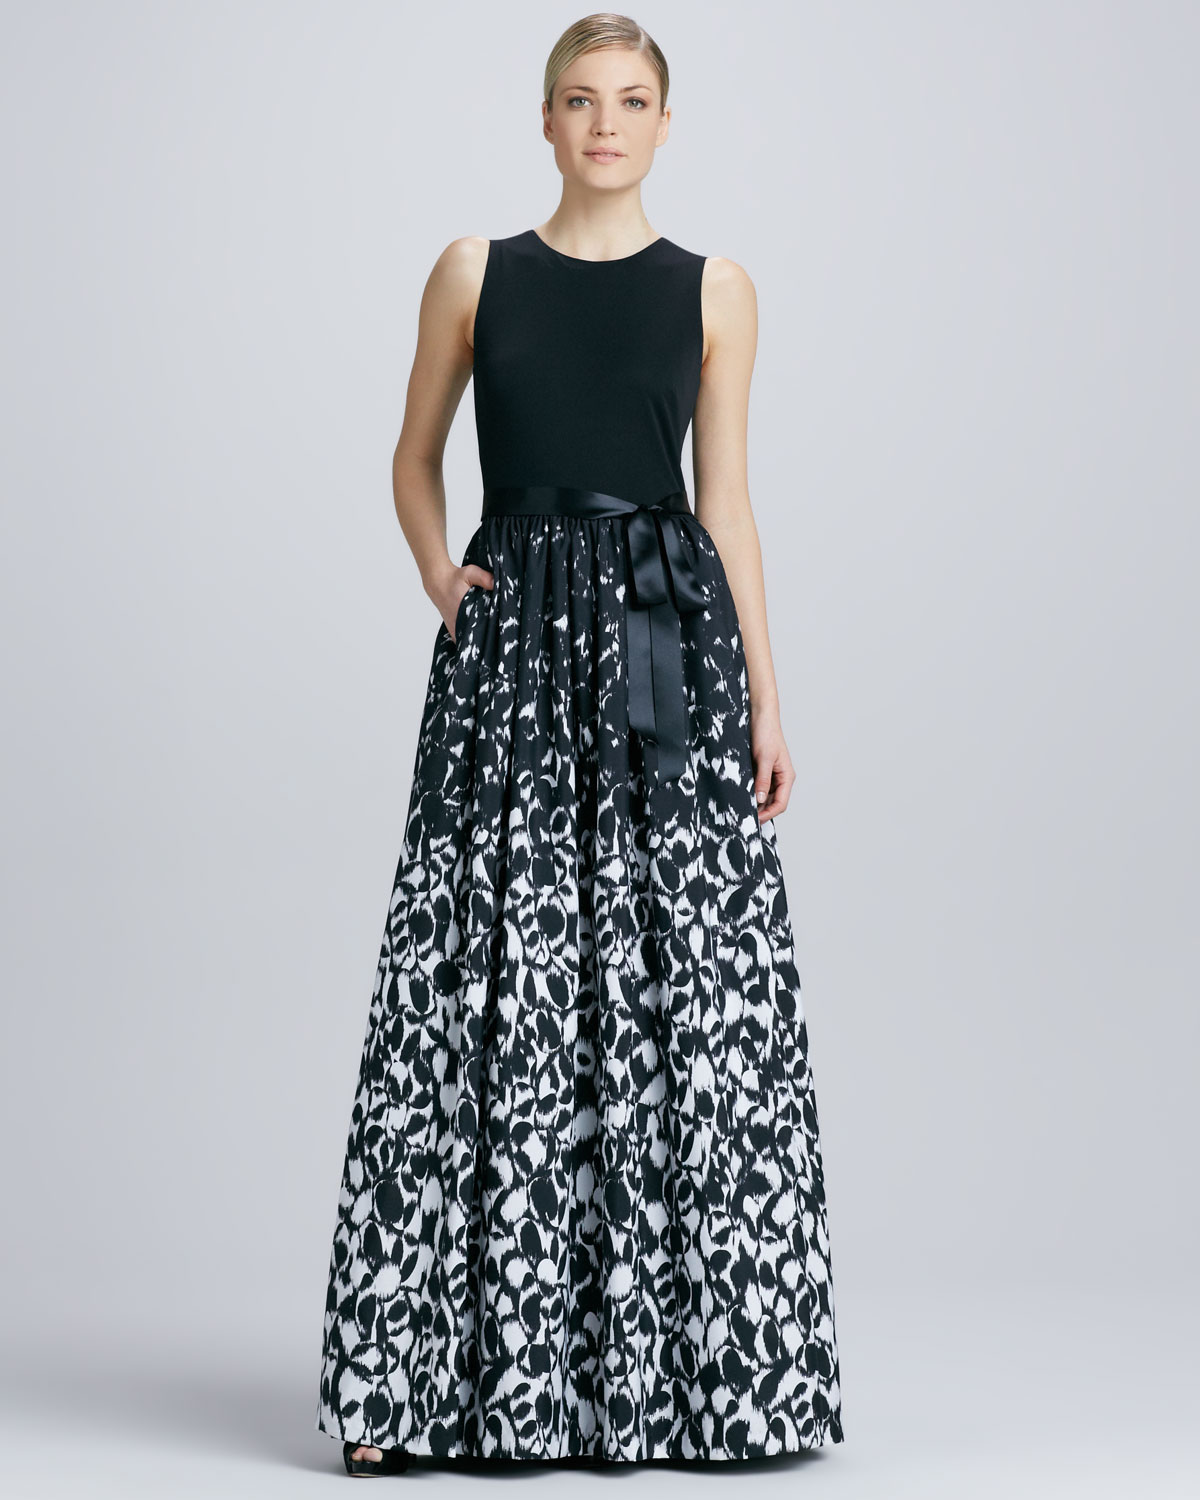 Lyst - Aidan Mattox Sleeveless Printed Combo Gown in Black